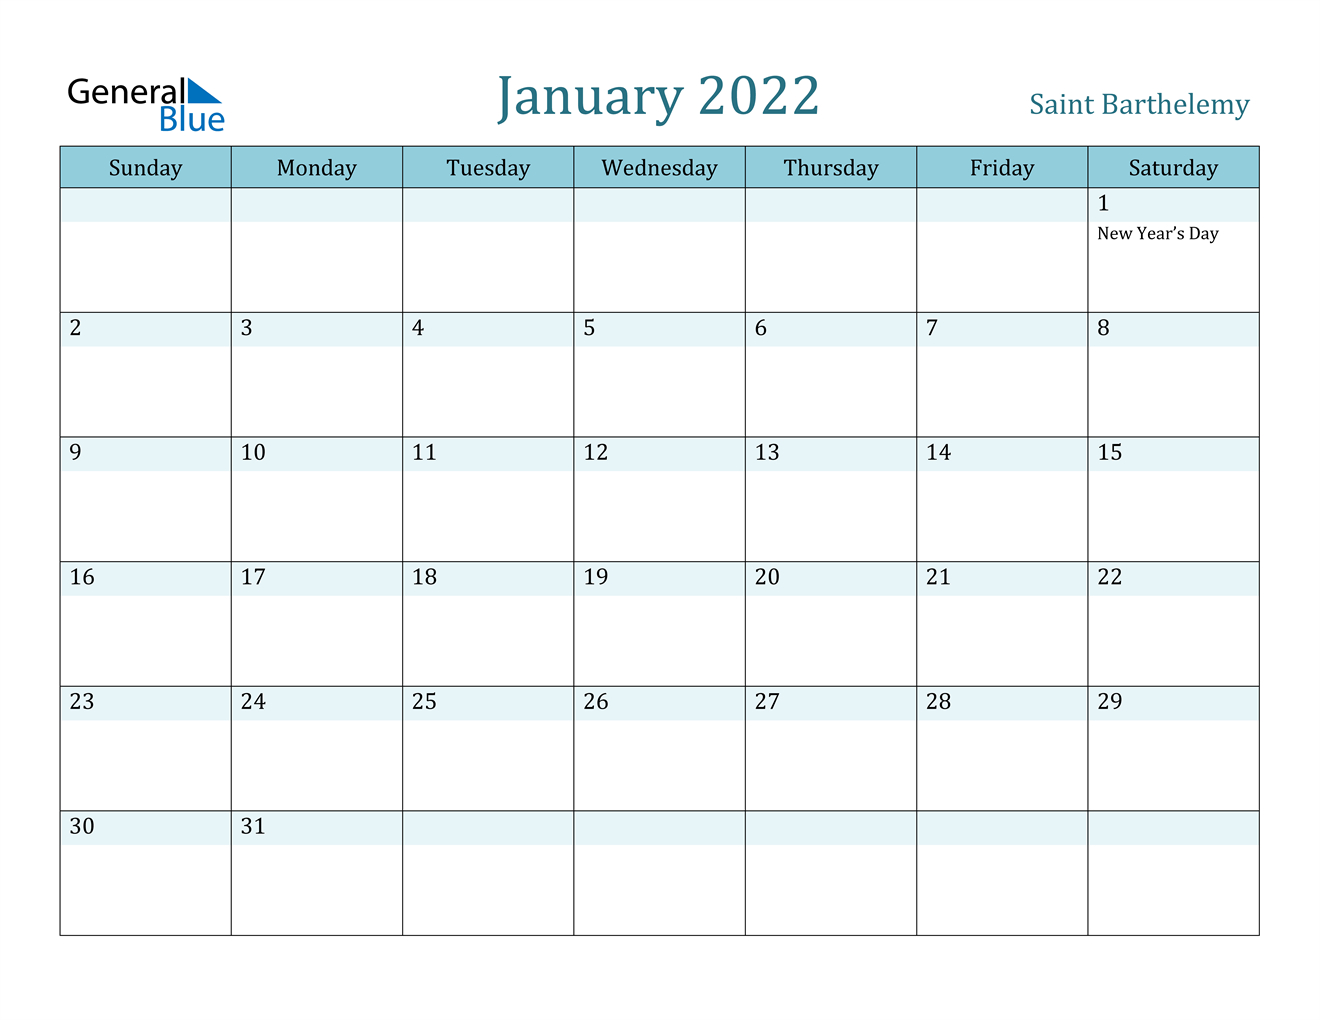 January 2022 Calendar - Saint Barthelemy